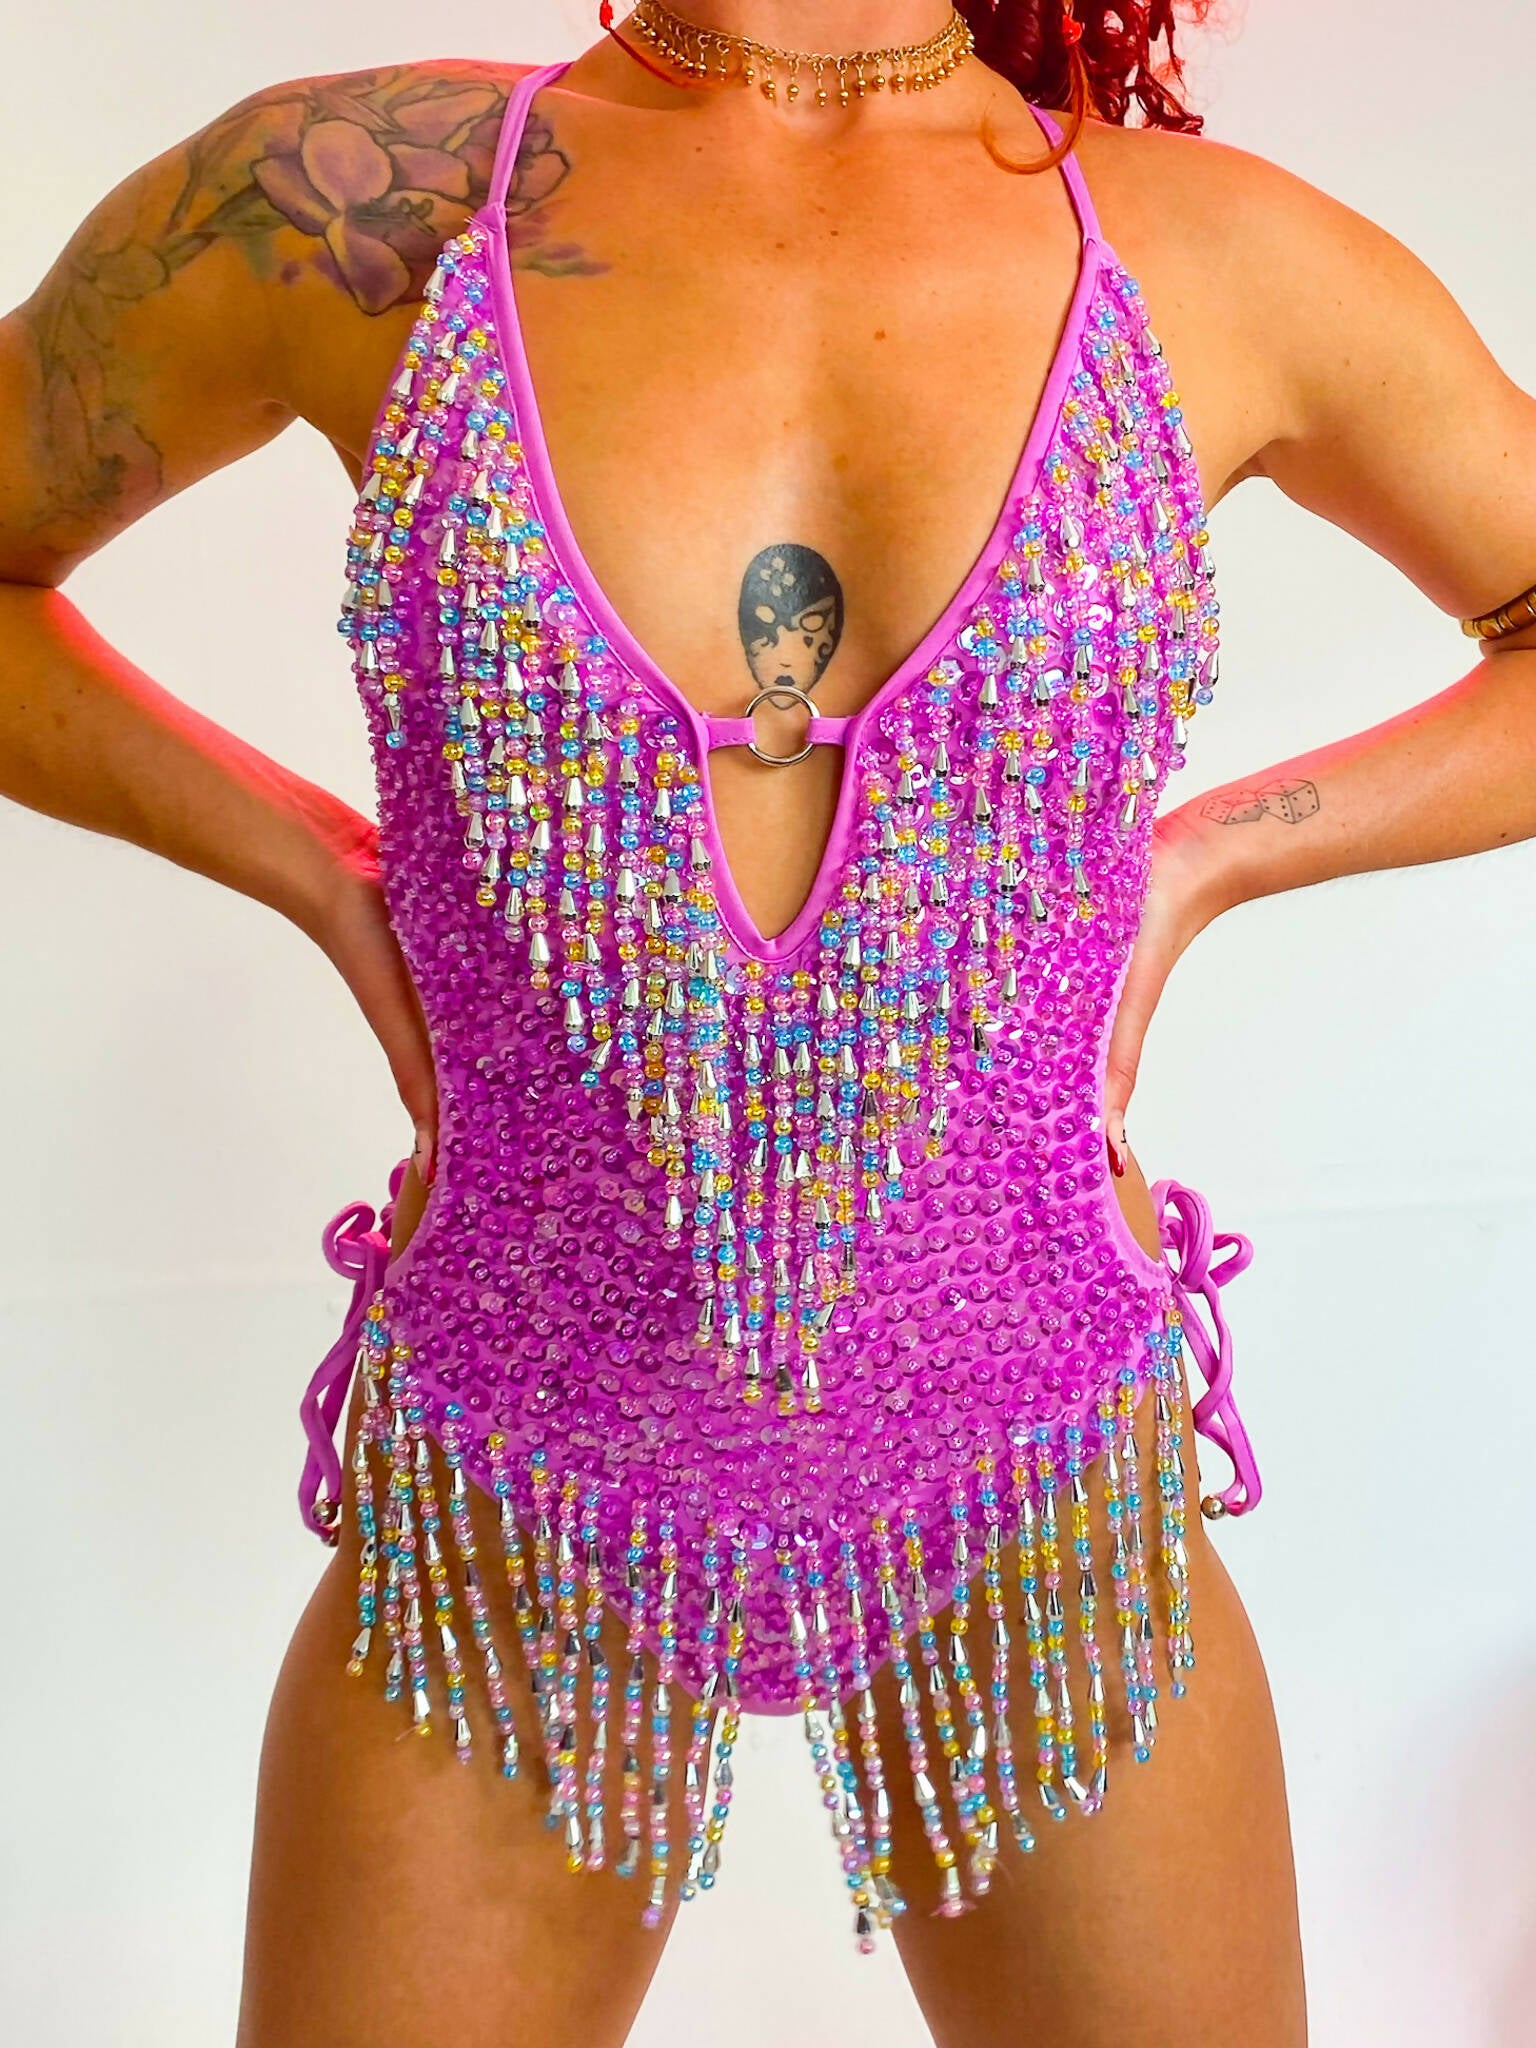 Sequin Bodysuit for Women in Rainbow Jewels. Perfect Festival